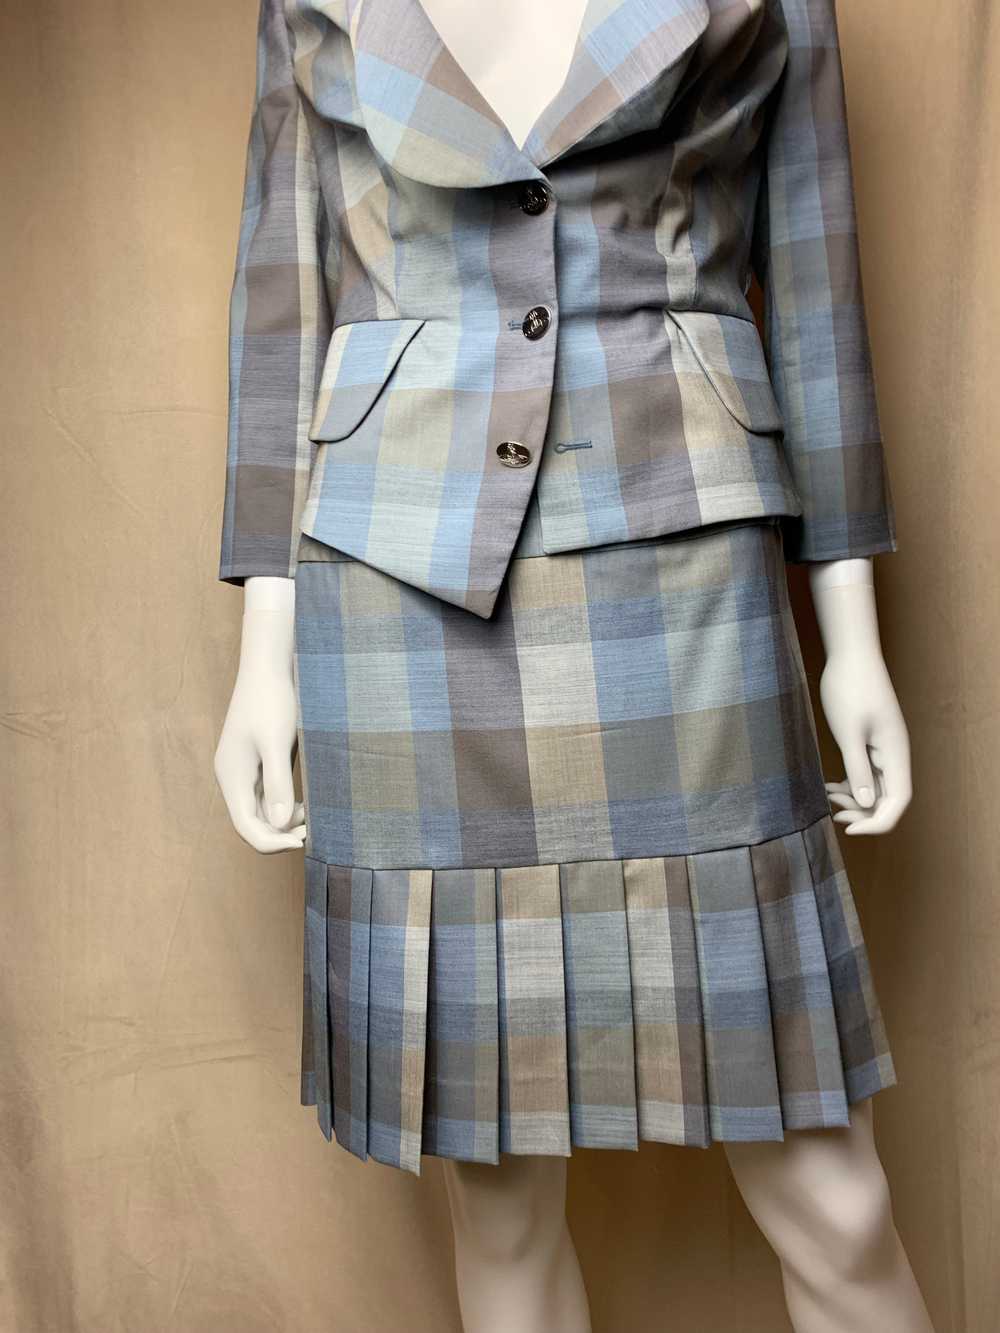 Vivienne Westwood SS 2013 Skirt Suit - image 5